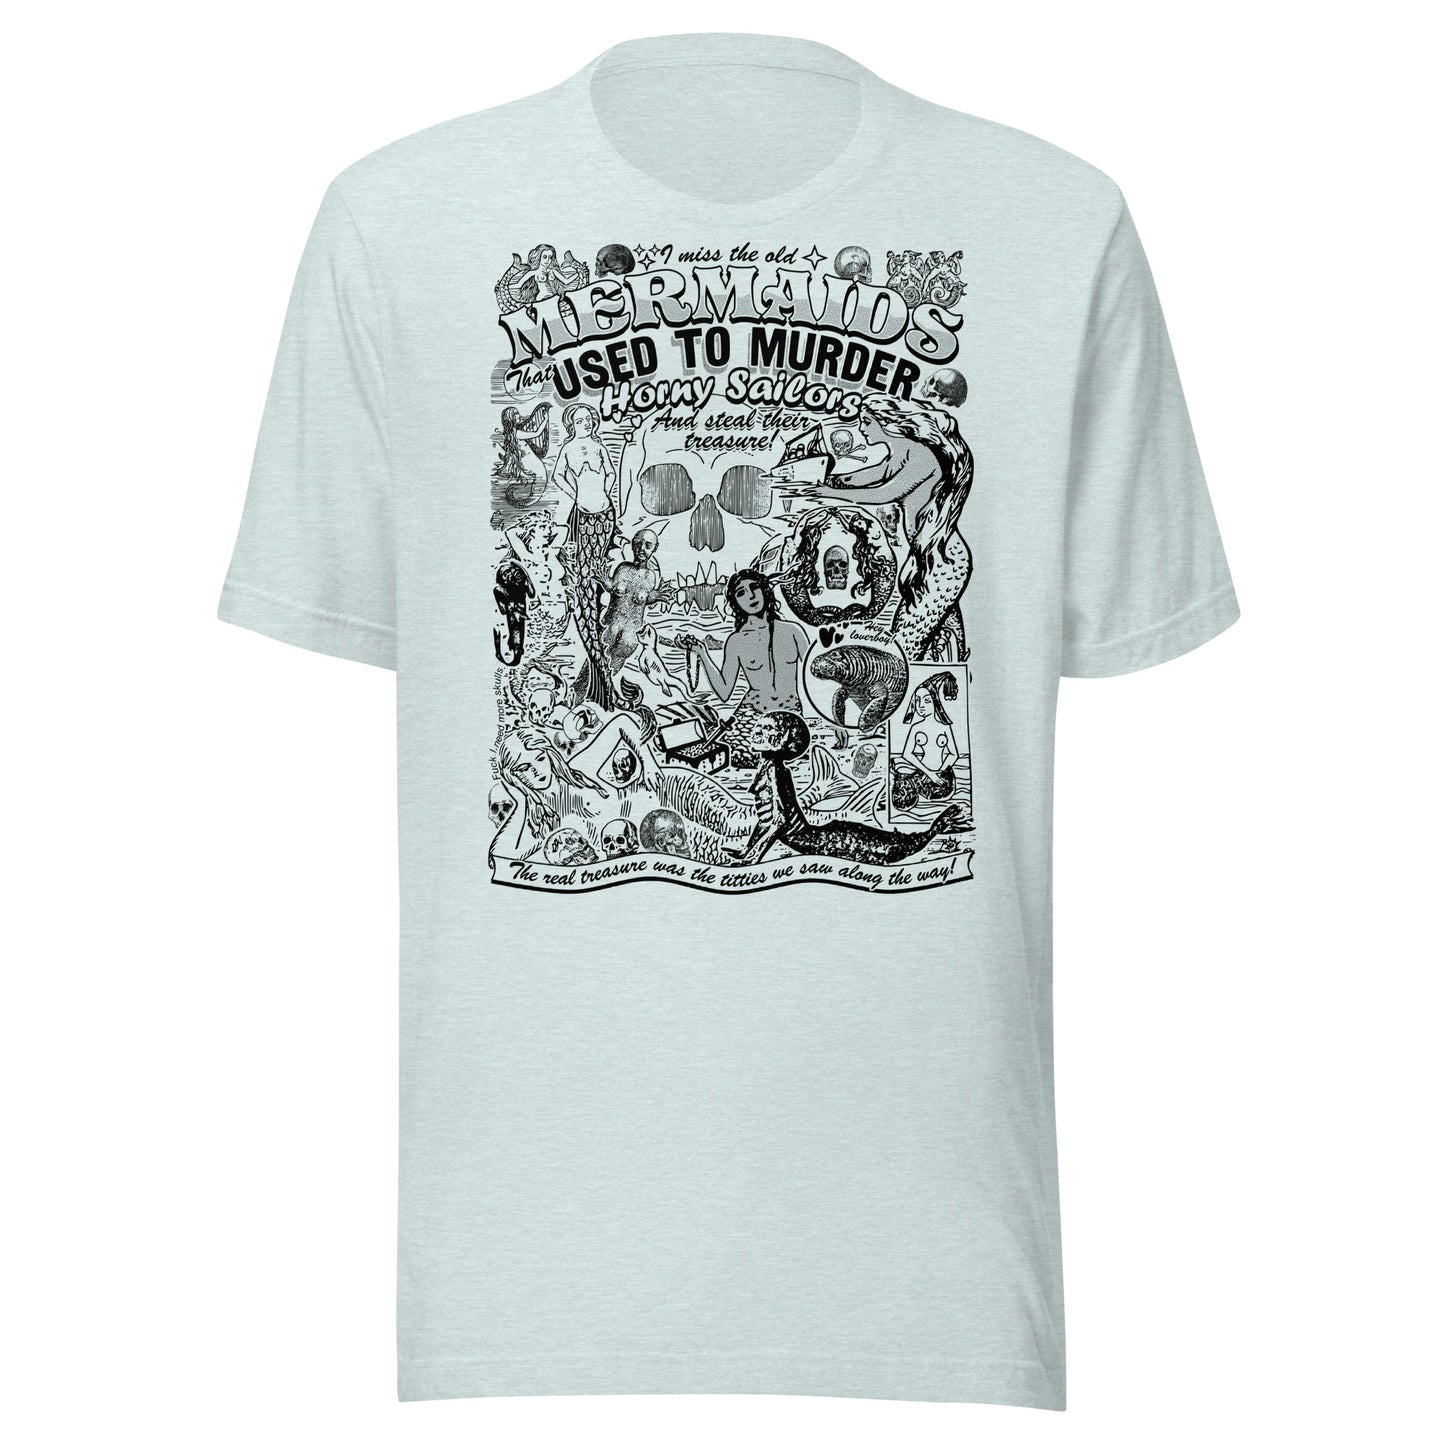 "I Miss the Old Mermaids" Unisex t-shirt